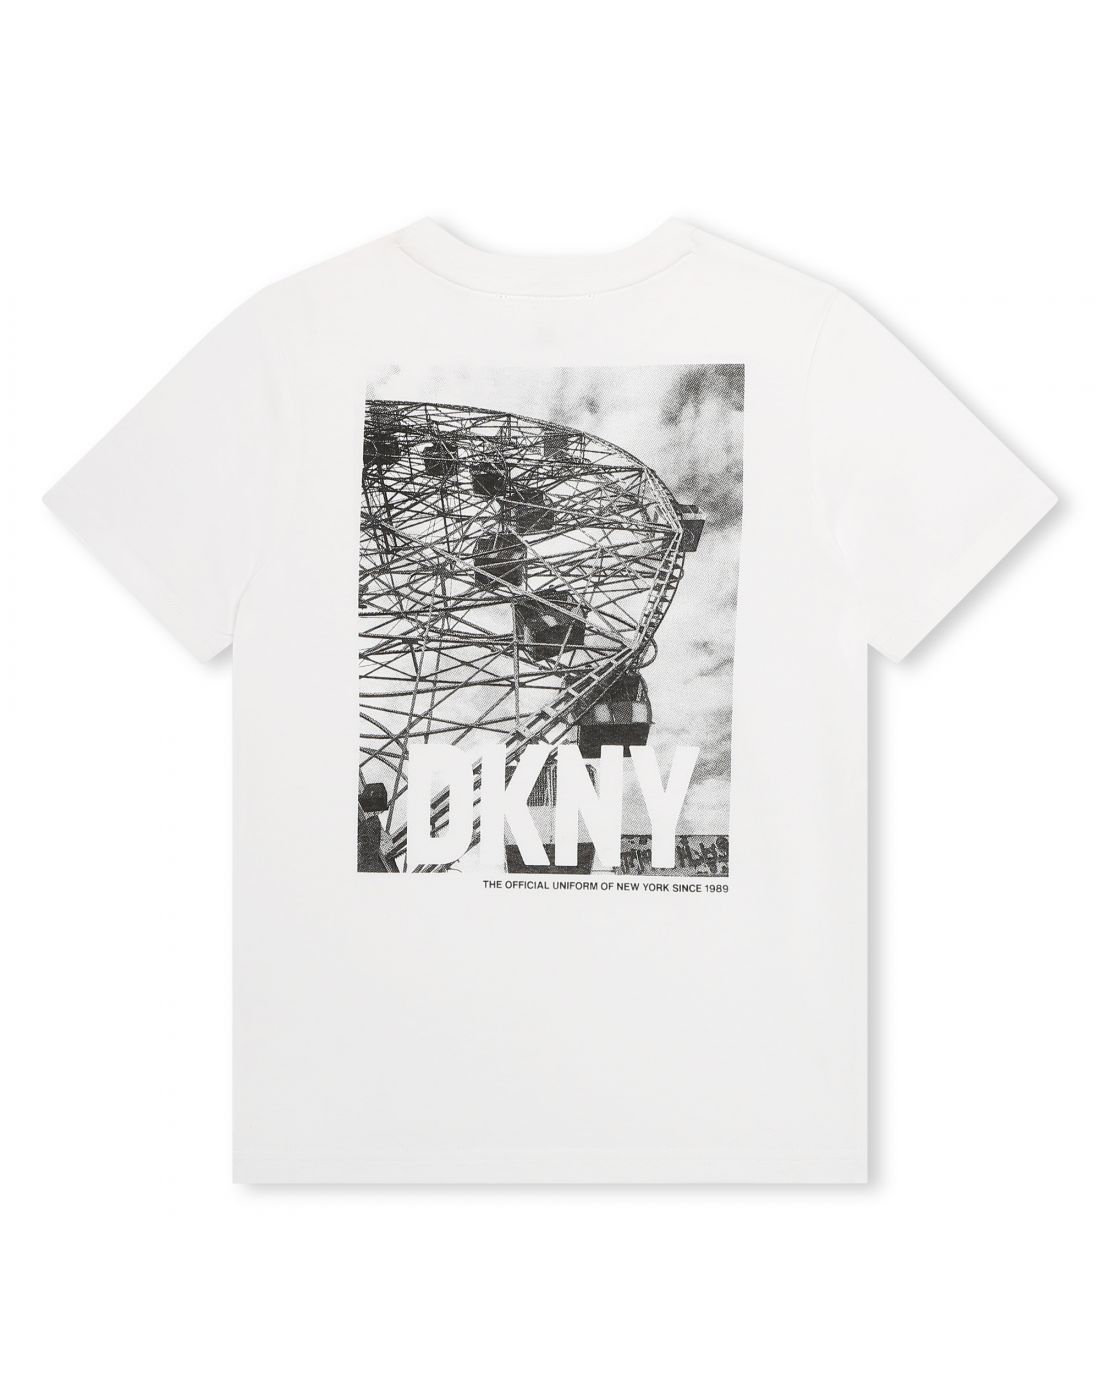 D.K.N.Y Kids Print  T-shirt